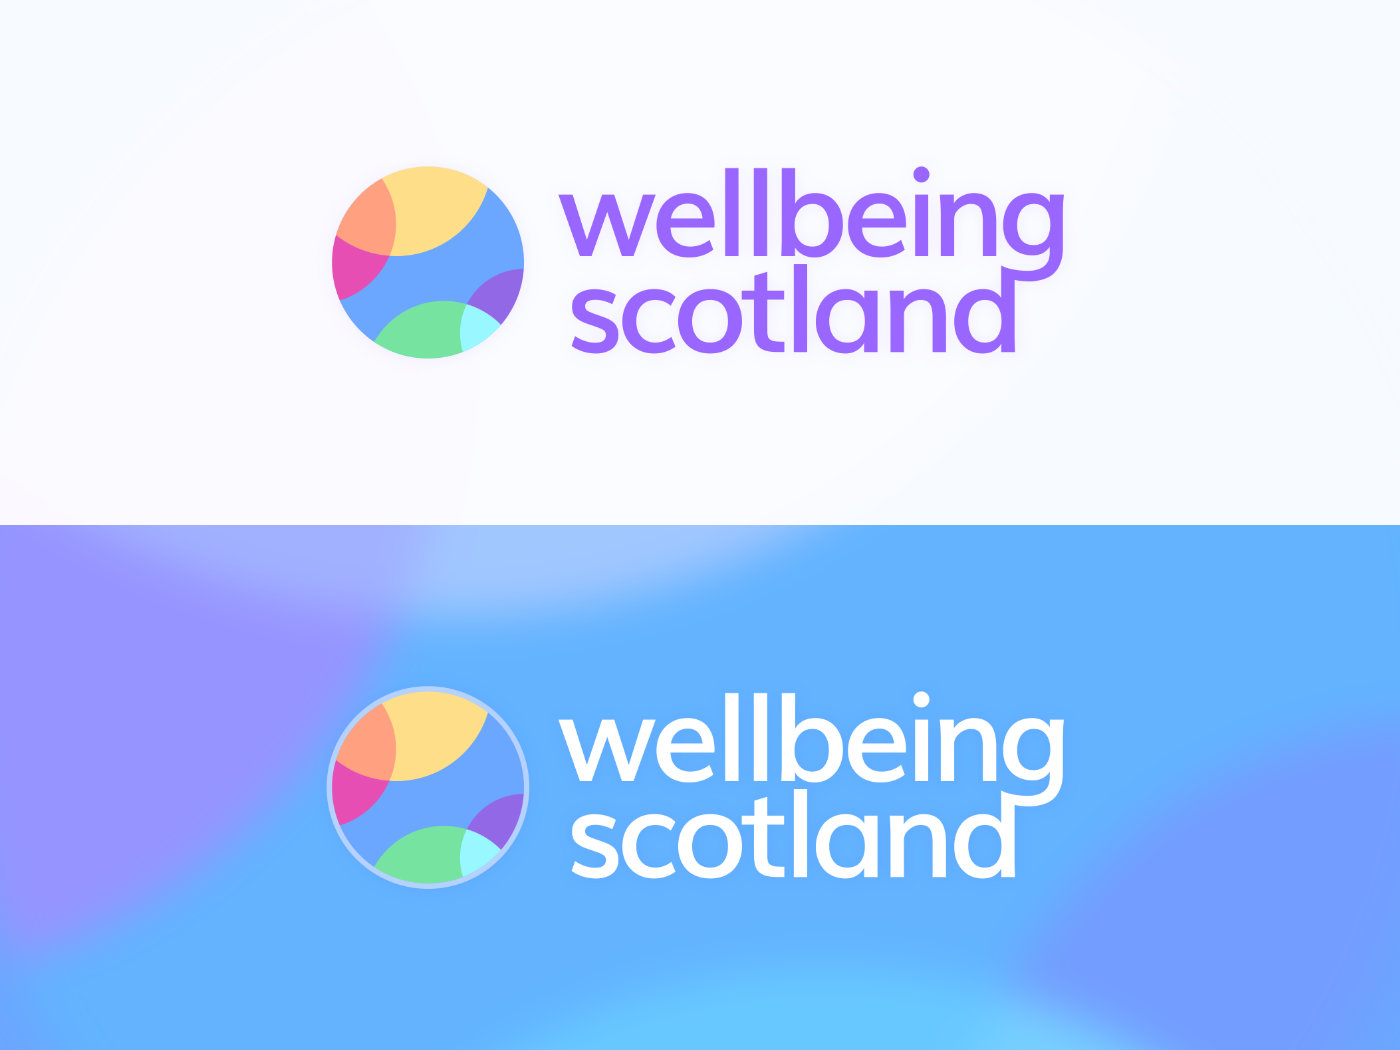 Wellebing Scotland Identity – Solution 01